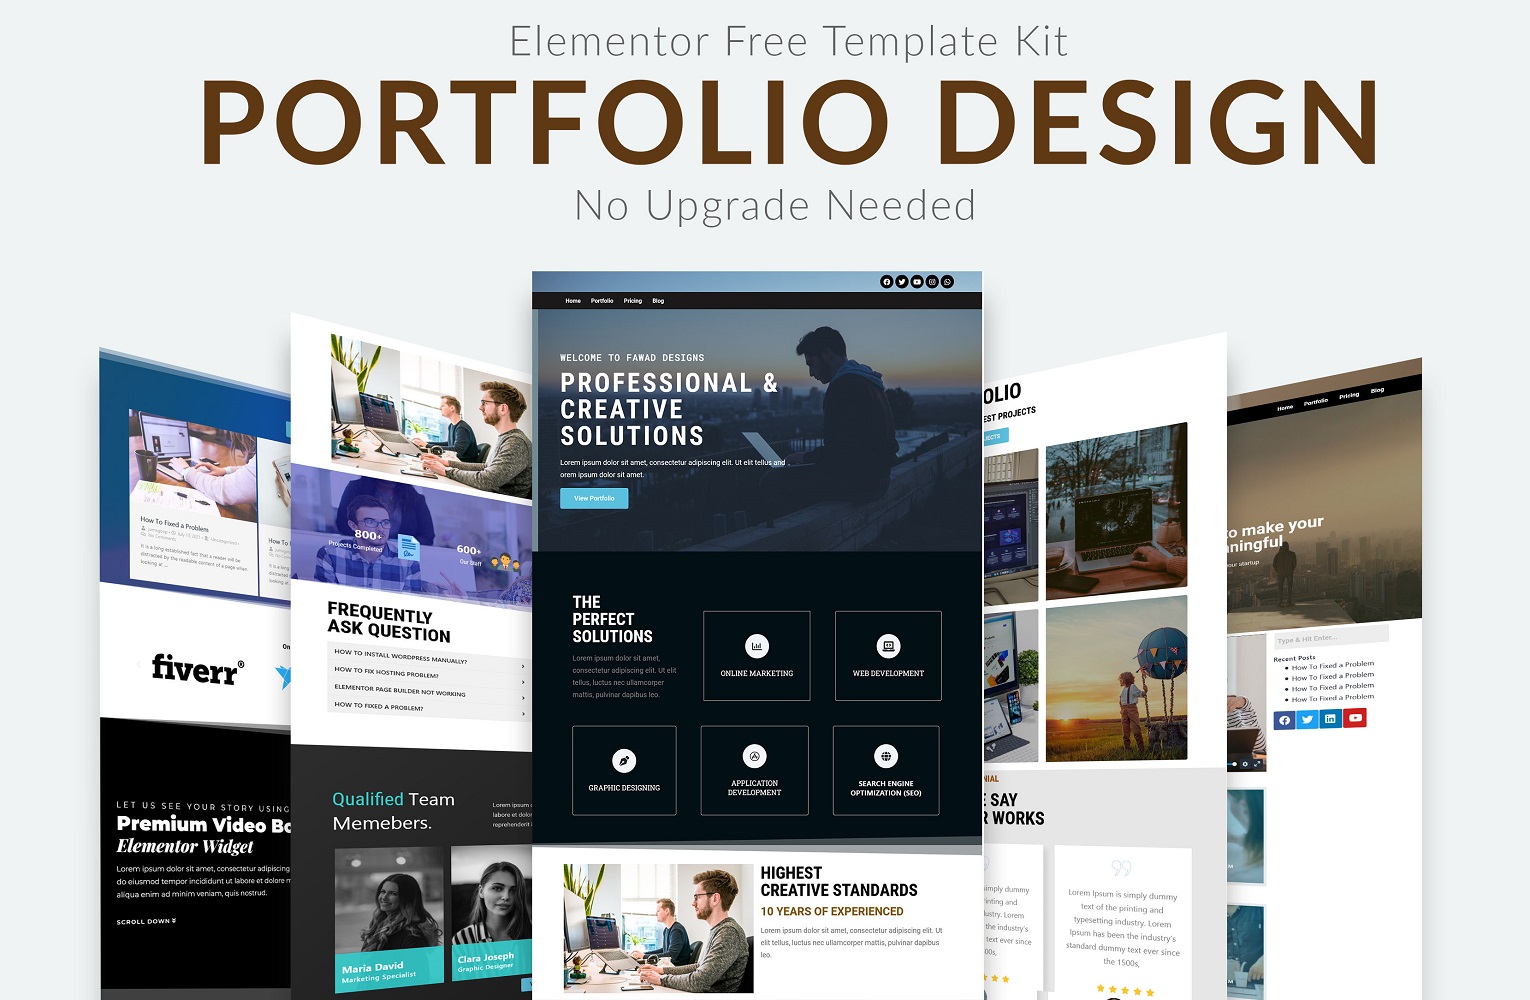 VeeFolio - Agency Portfolio Elementor Template Kit